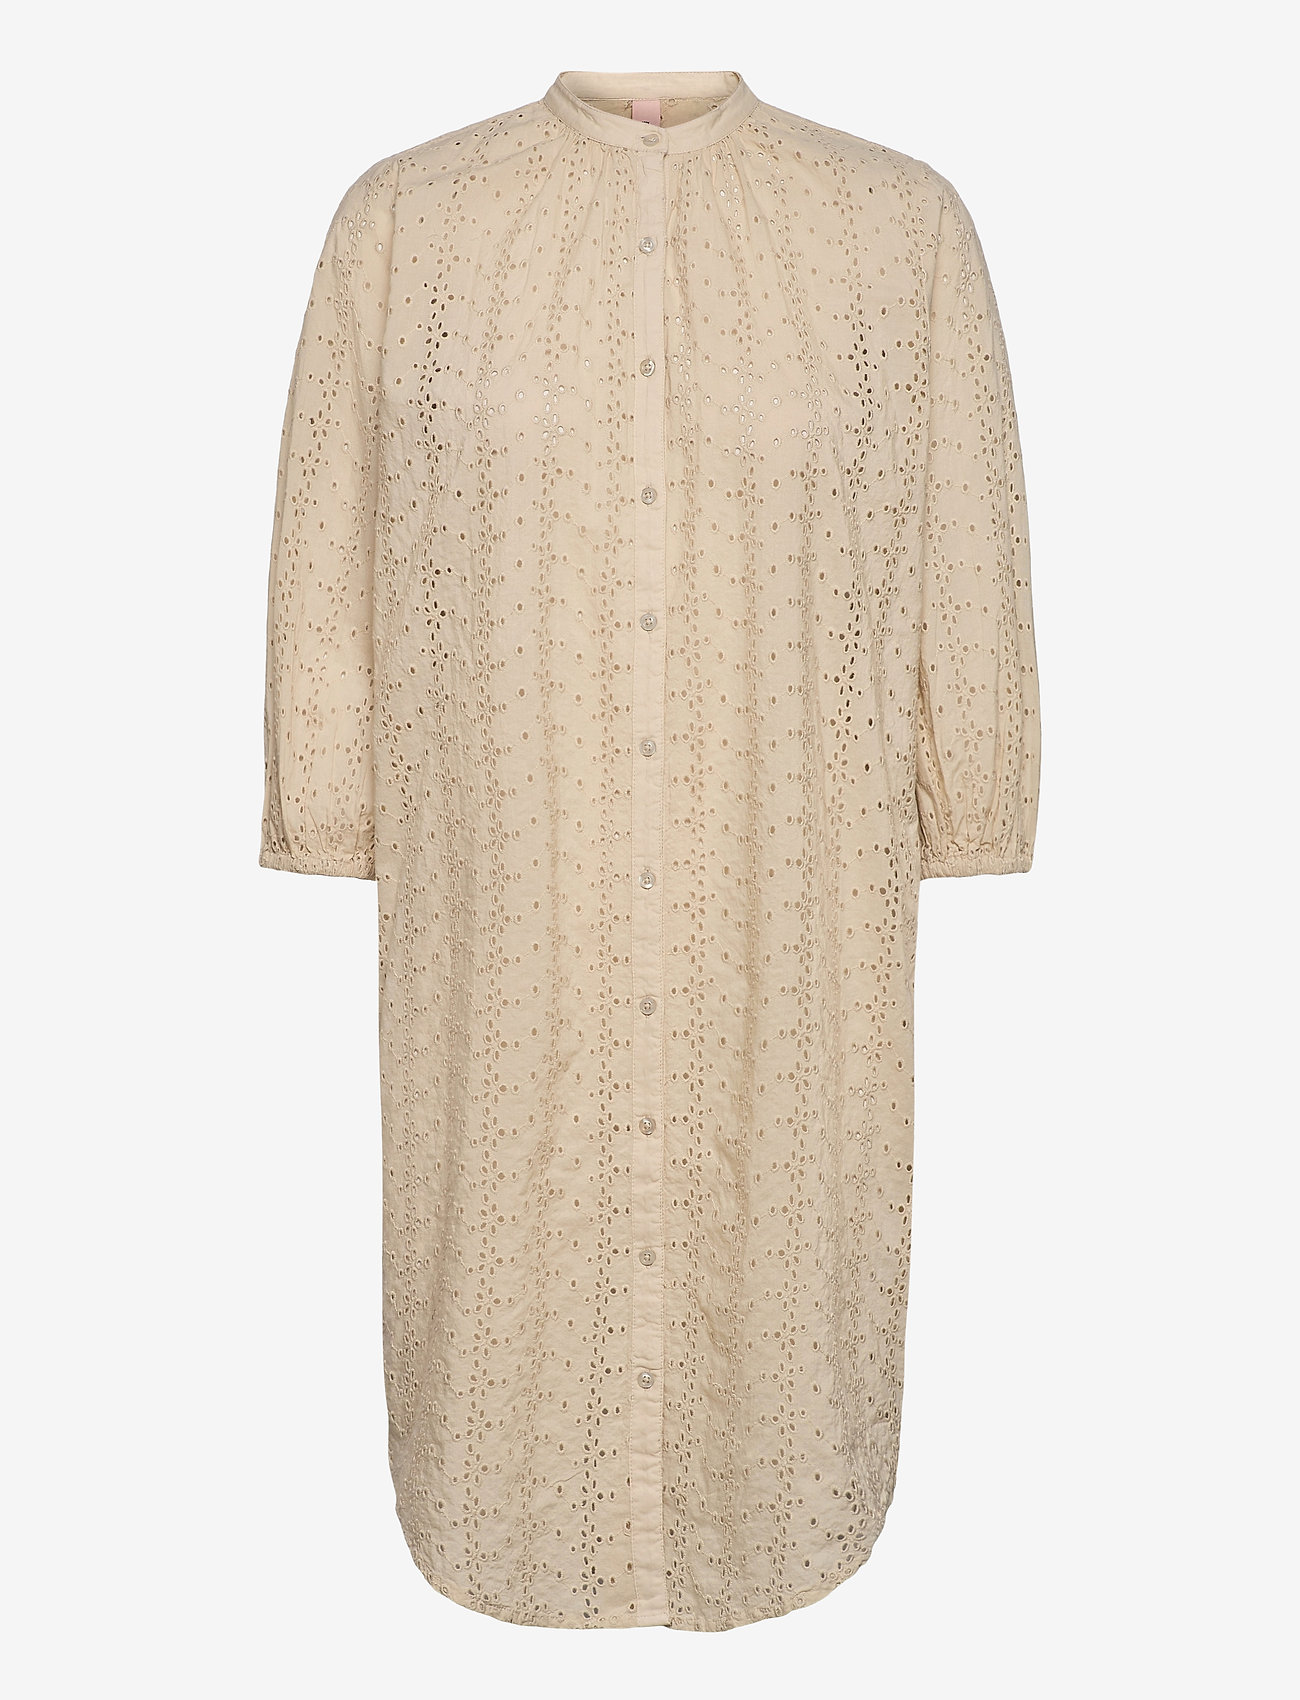 Becksöndergaard - Anglaise Kaylin Tunic - marškinių tipo suknelės - oyster gray - 0